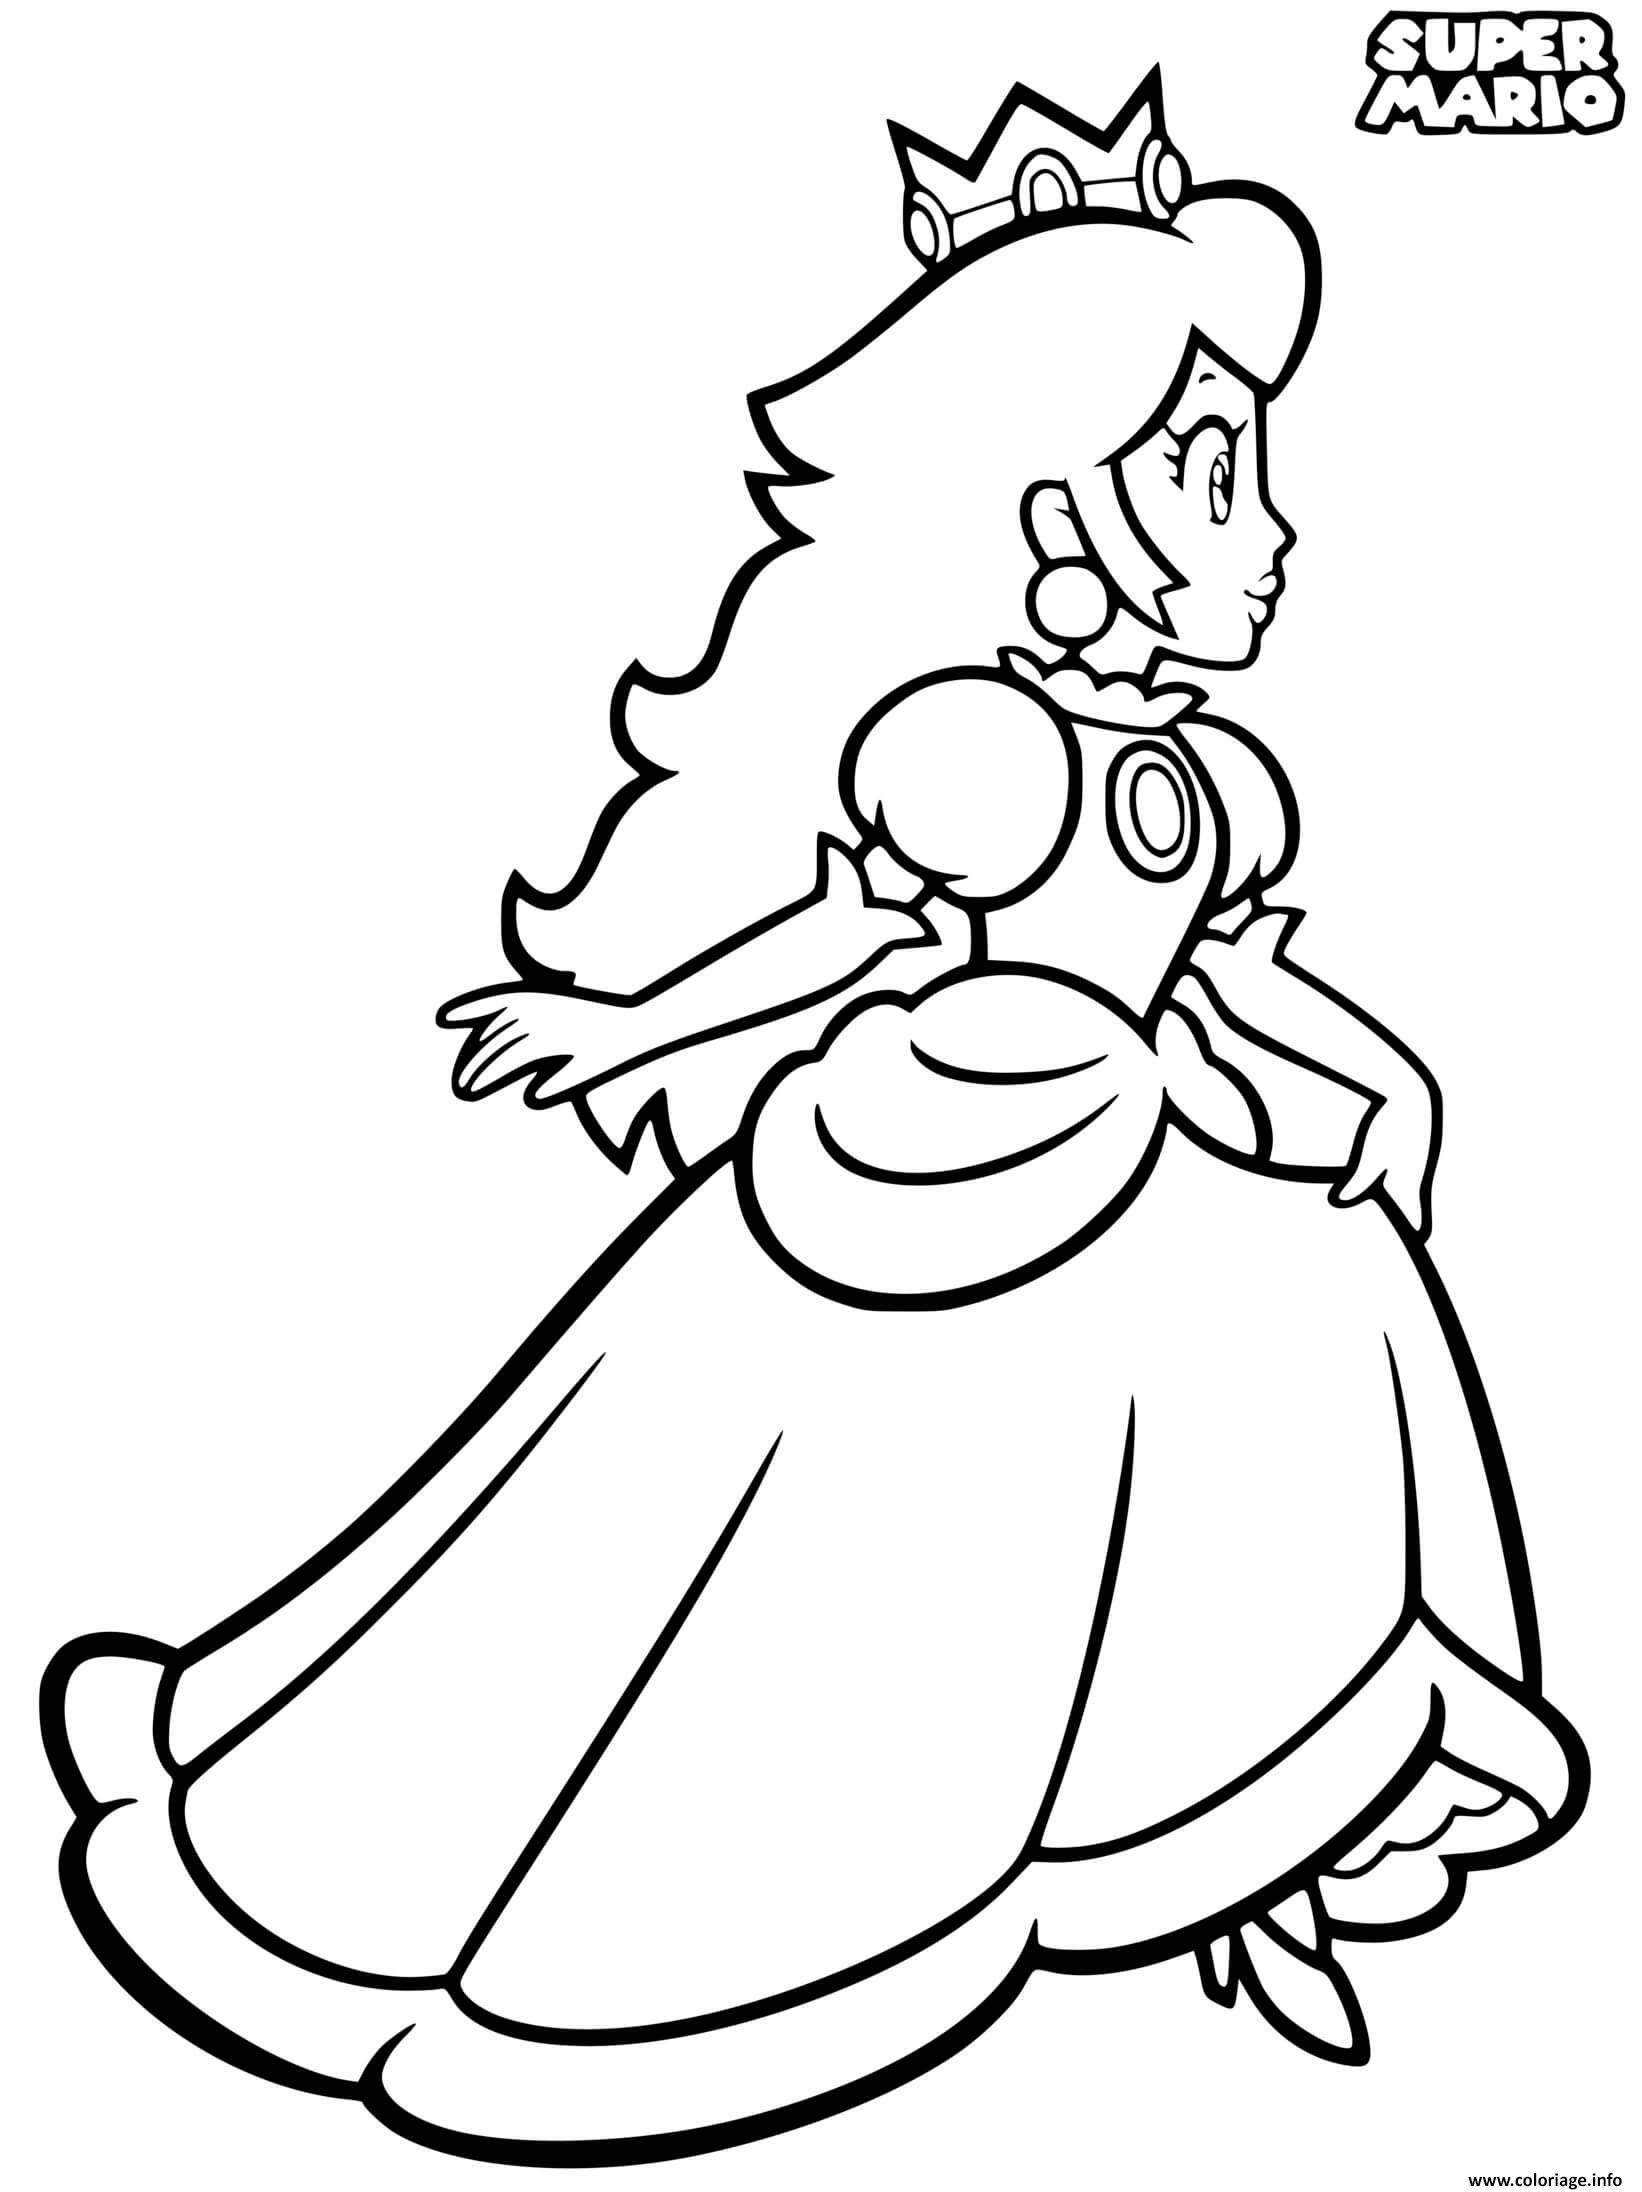 Coloriage Super Mario Princess Peach Dessin à Imprimer